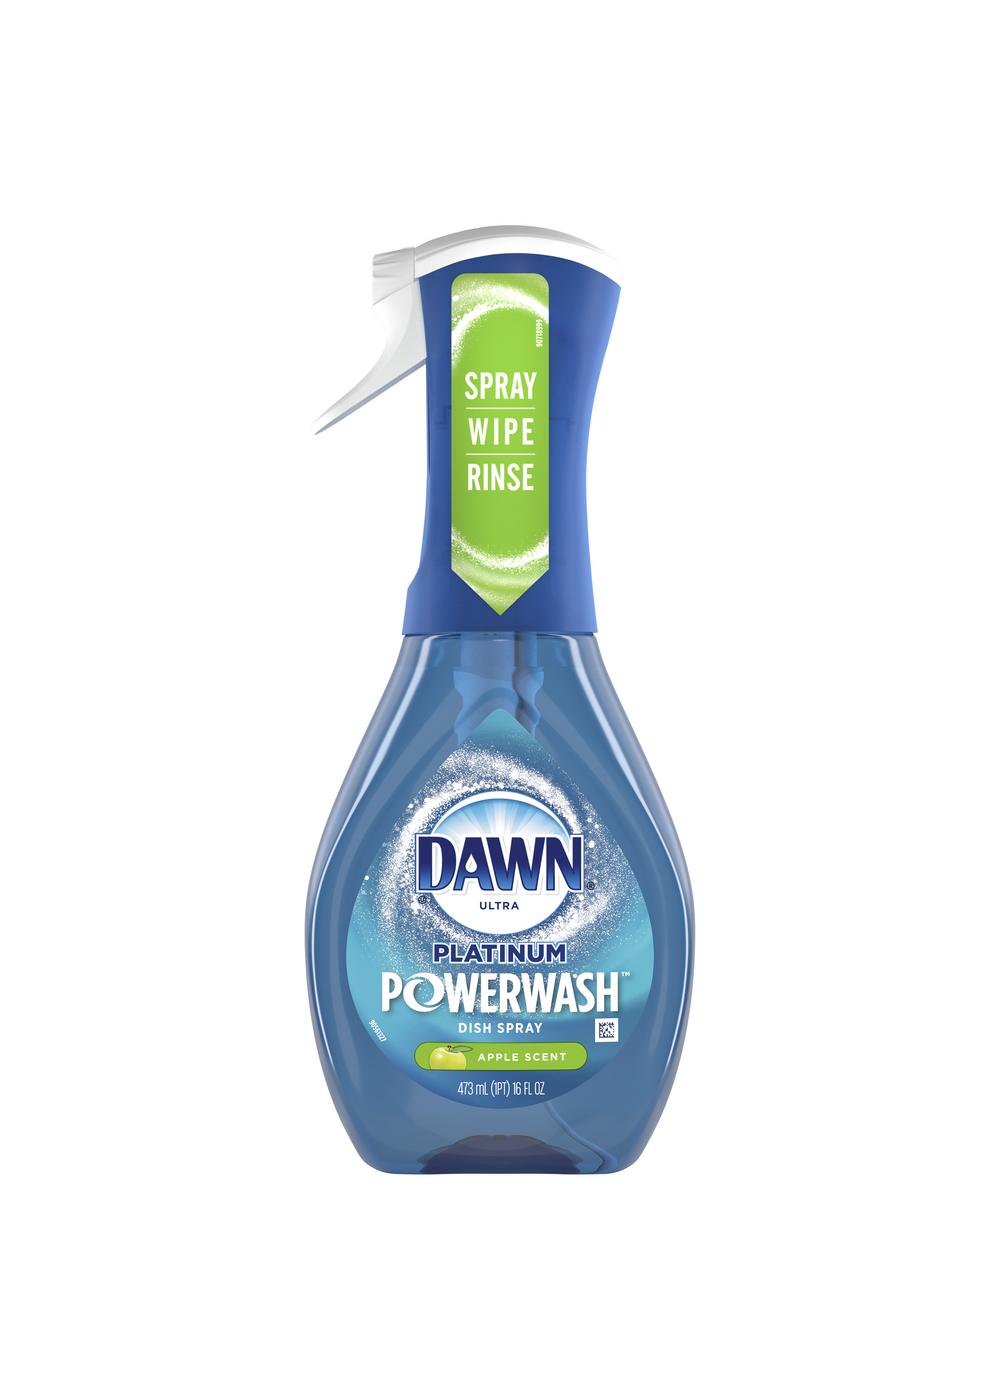 Dawn Powerwash Platinum Apple Scent Dish Spray; image 1 of 3